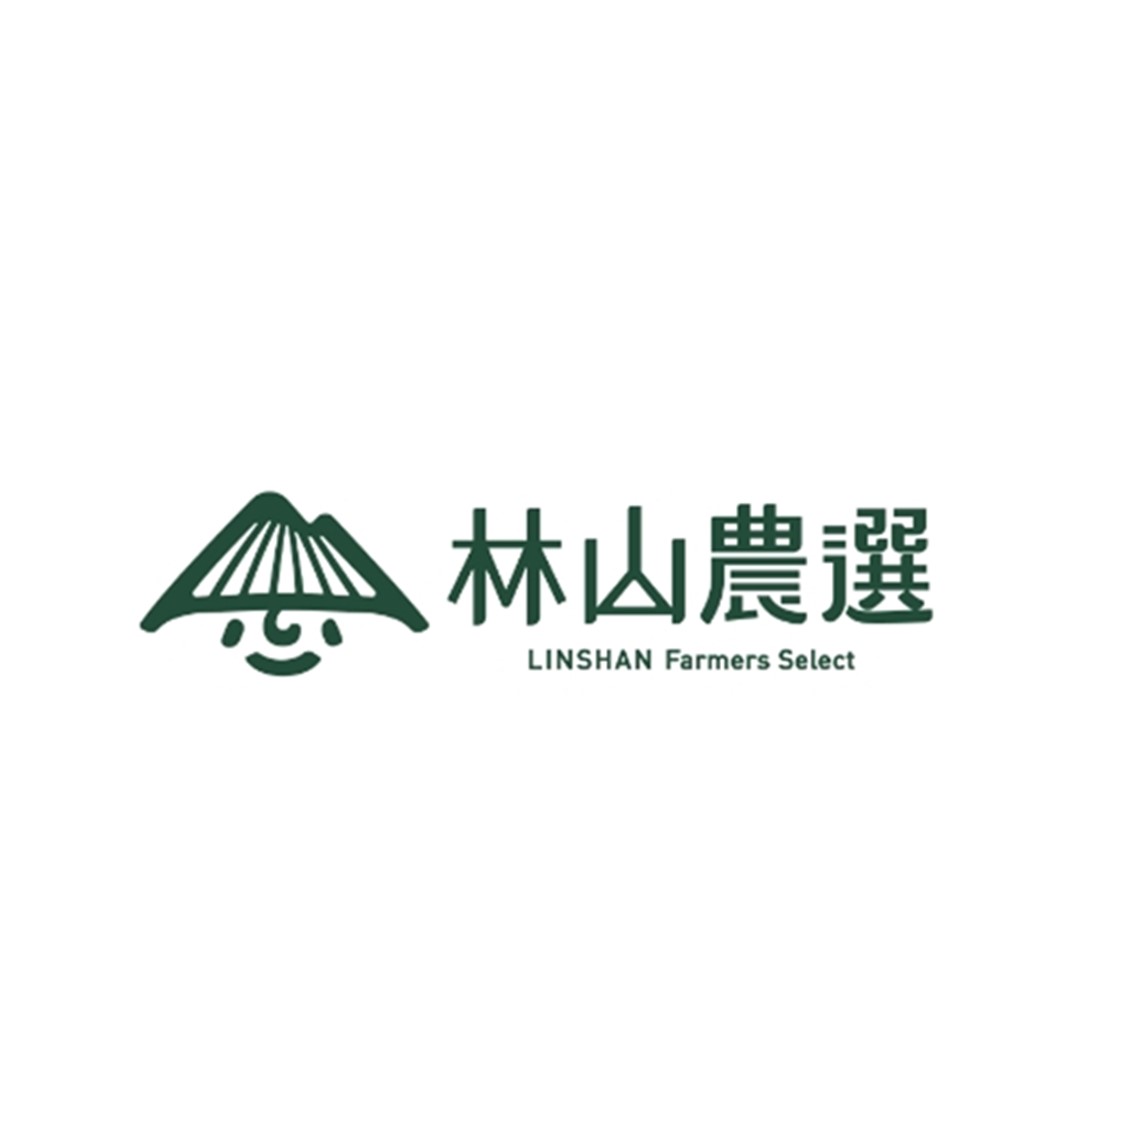 林山農選 Logo